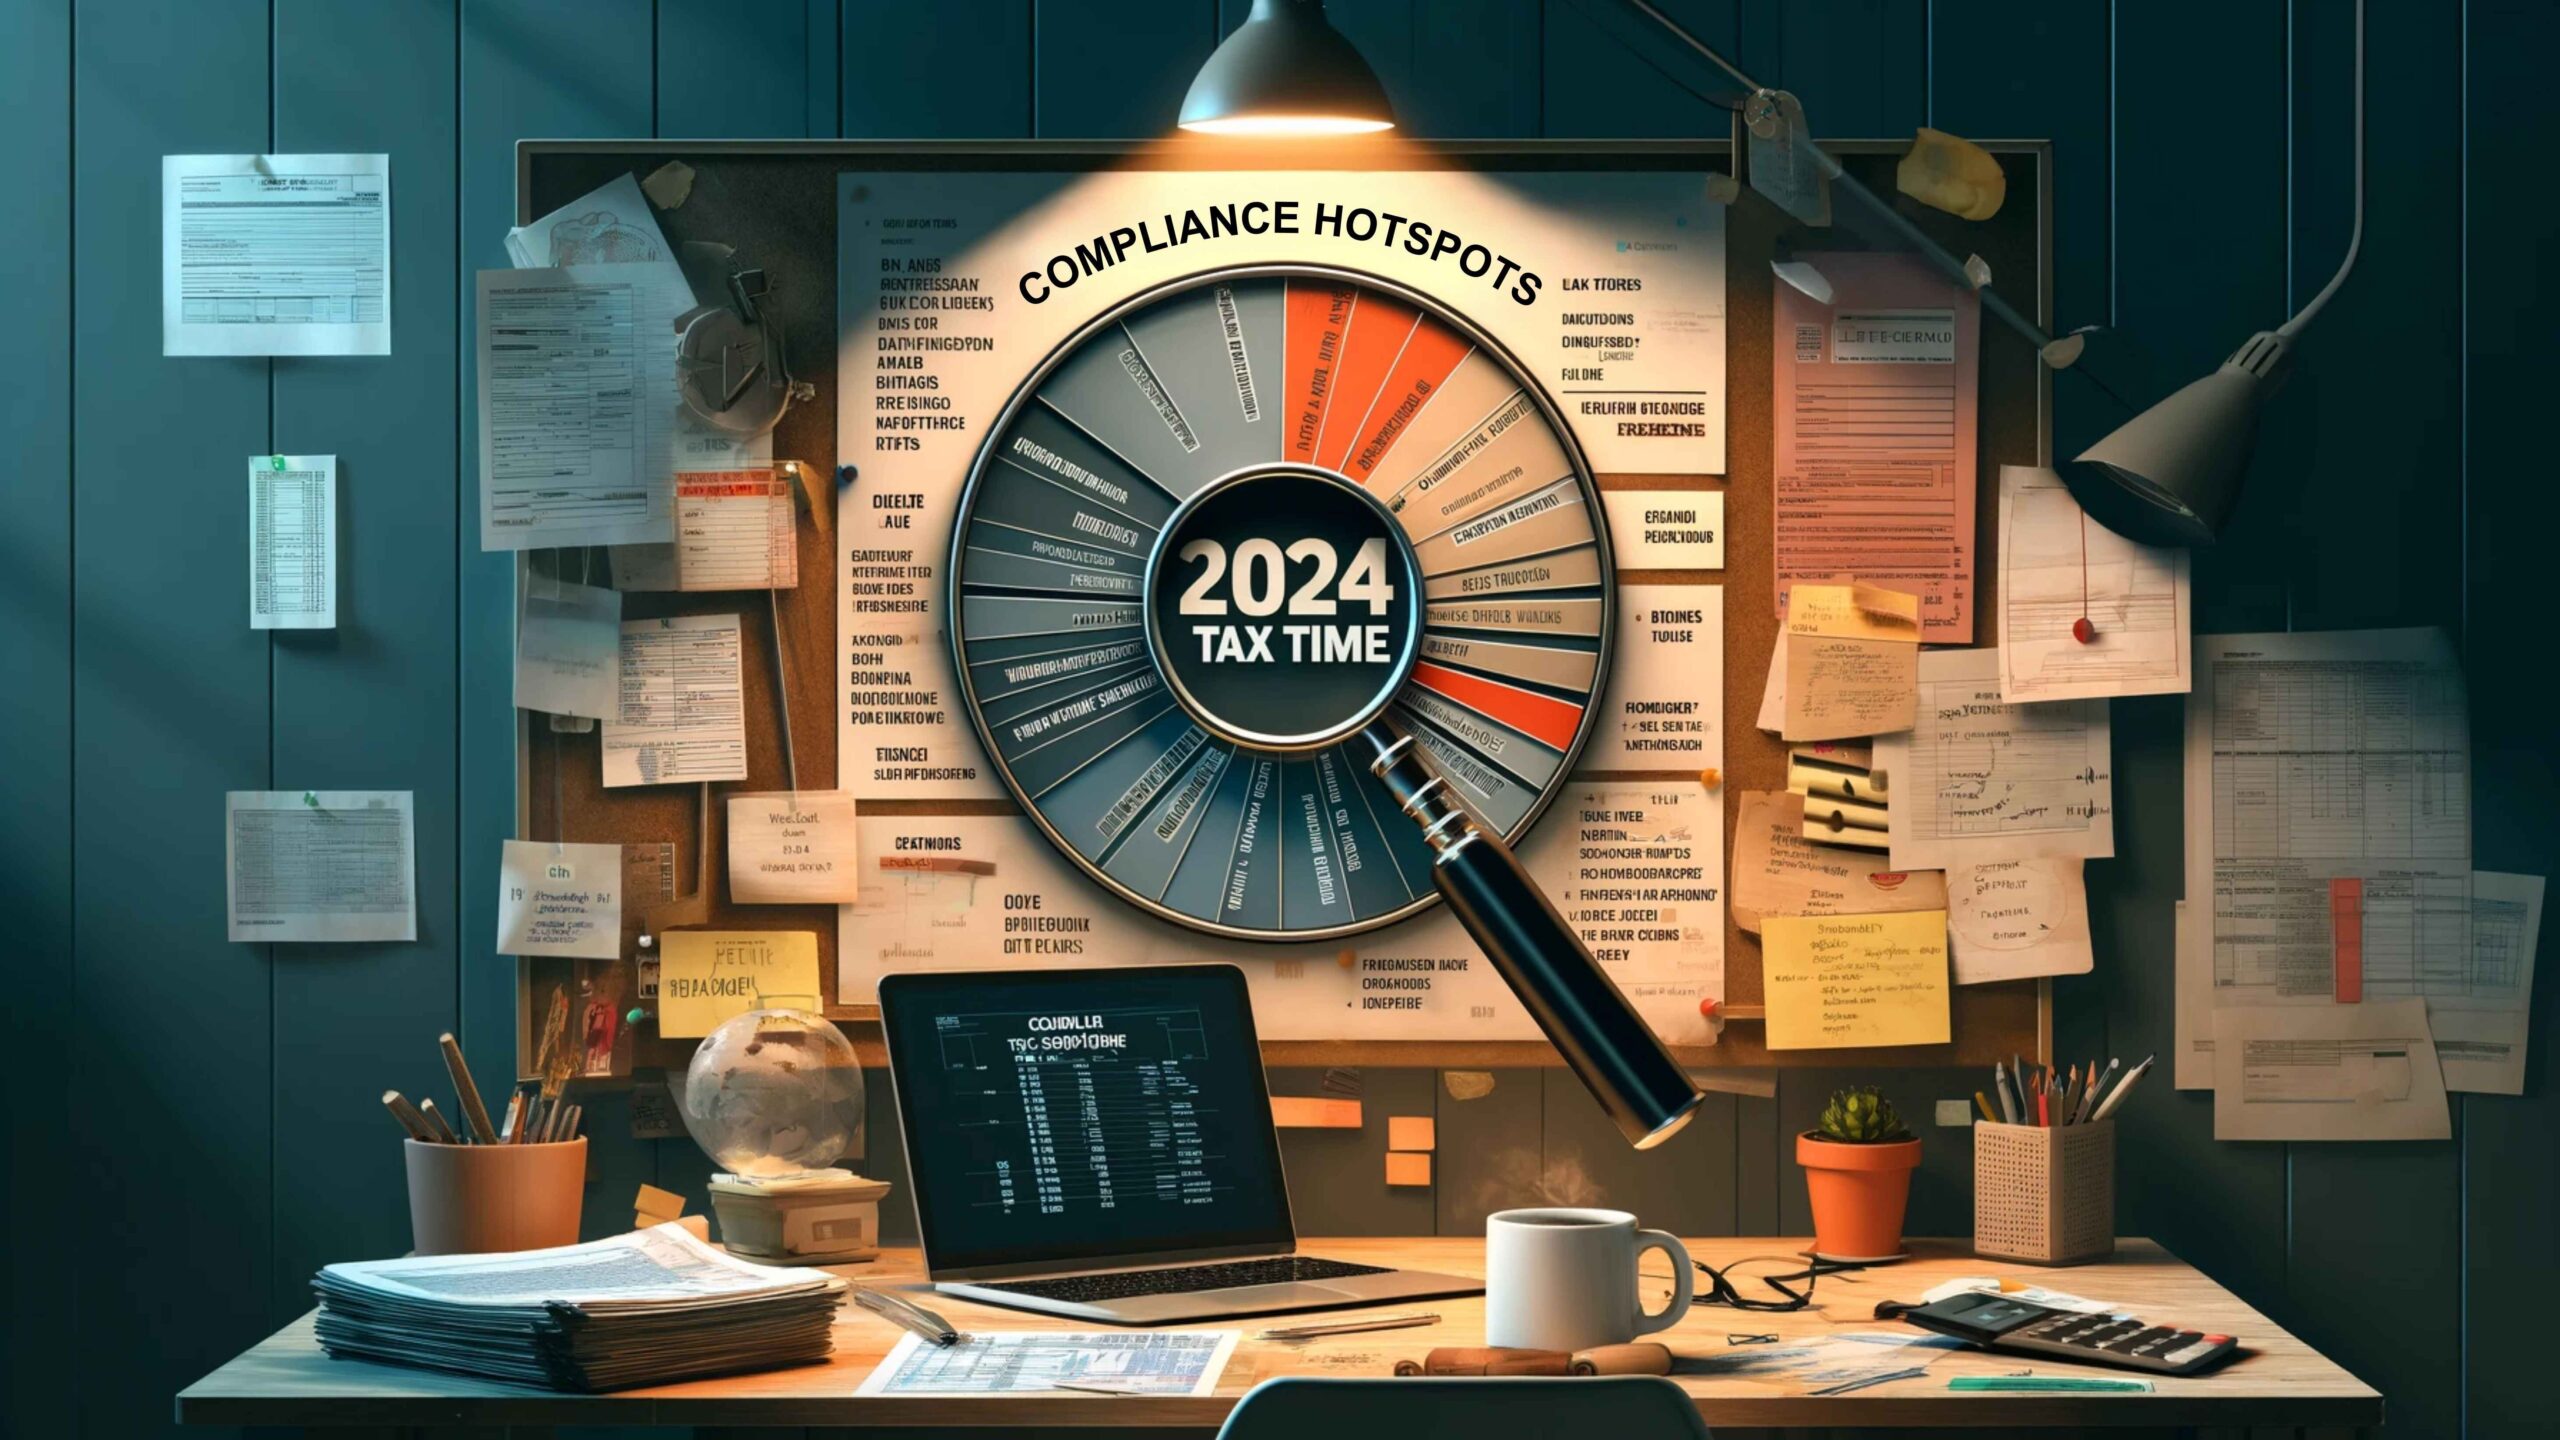 2024 Tax Time: Compliance Hotspots